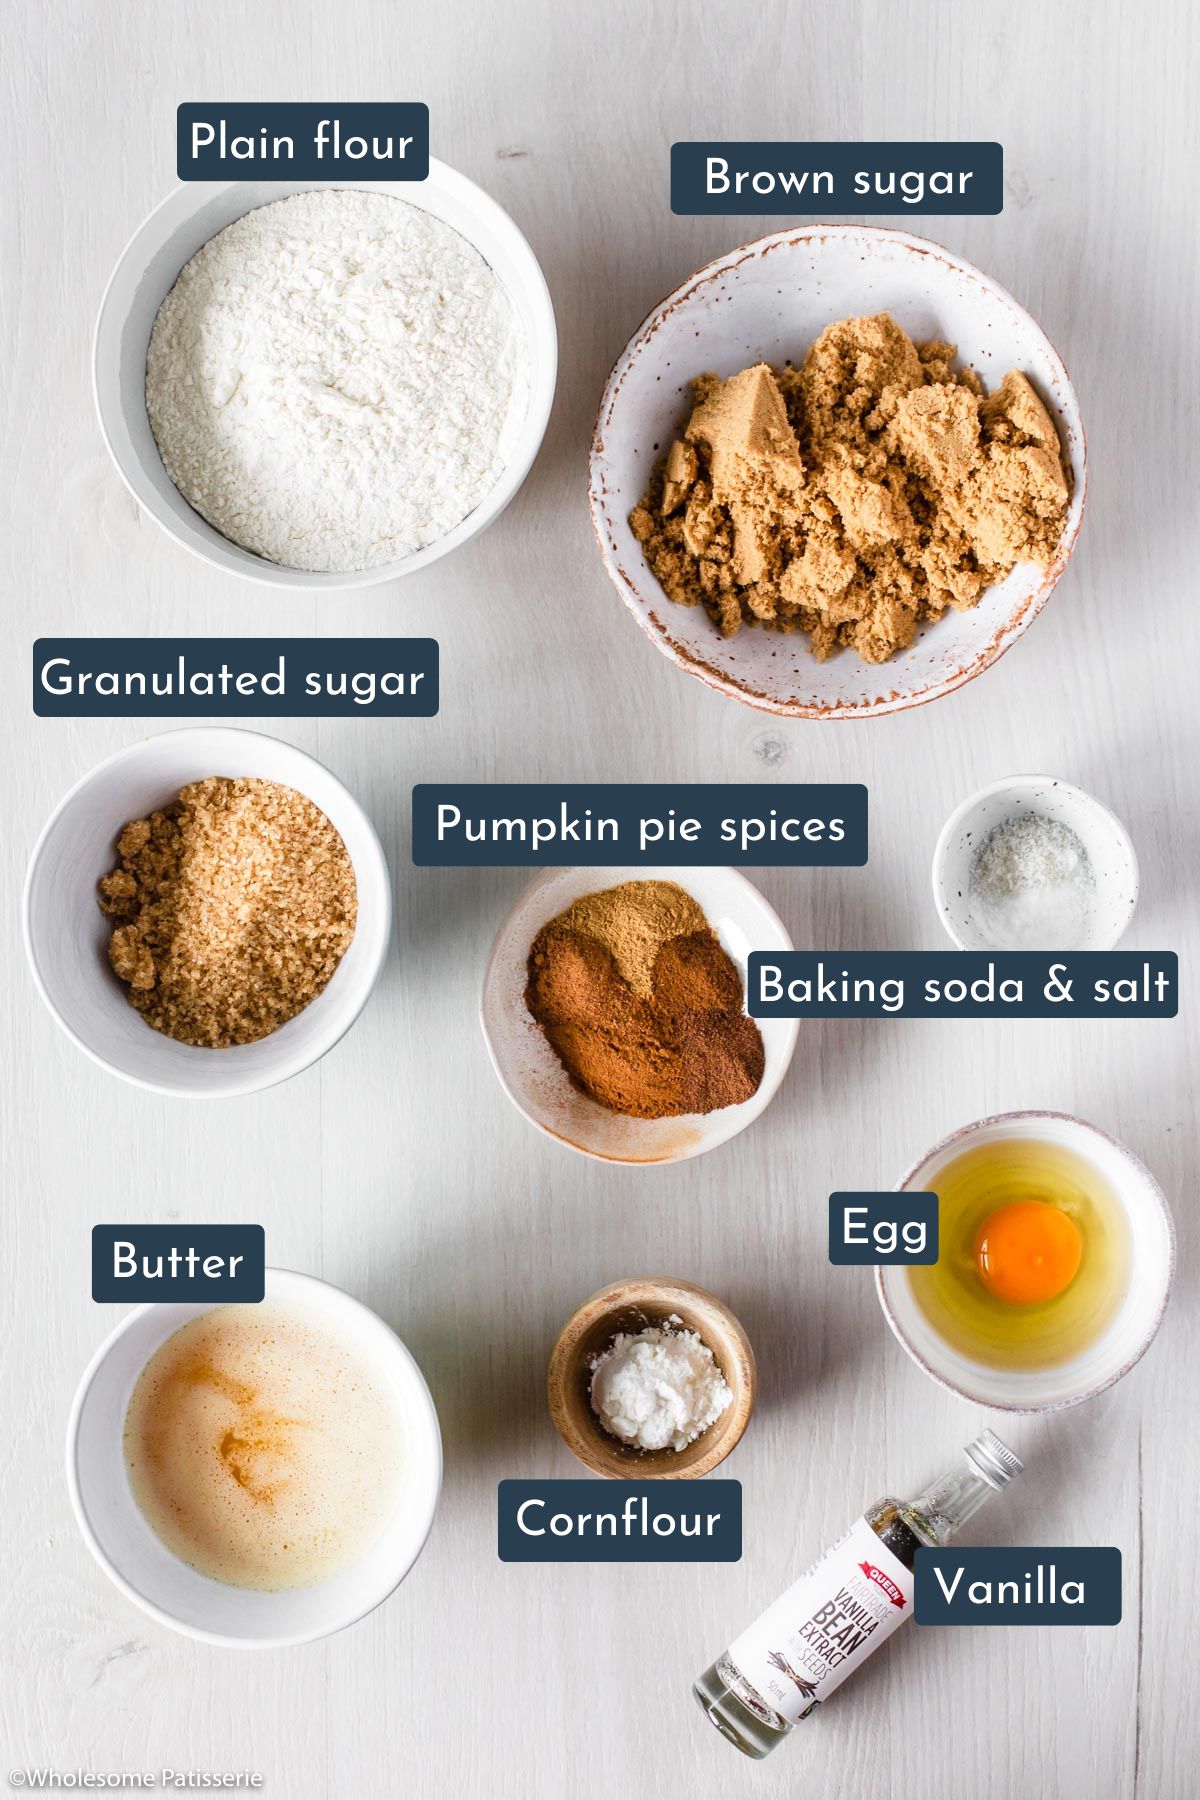 Ingredients needed to make these pumpkin spice cookies are all-purpose flour, brown sugar, granulated sugar, pumpkin pie spice, baking soda, salt, egg, butter, cornflour and vanilla.